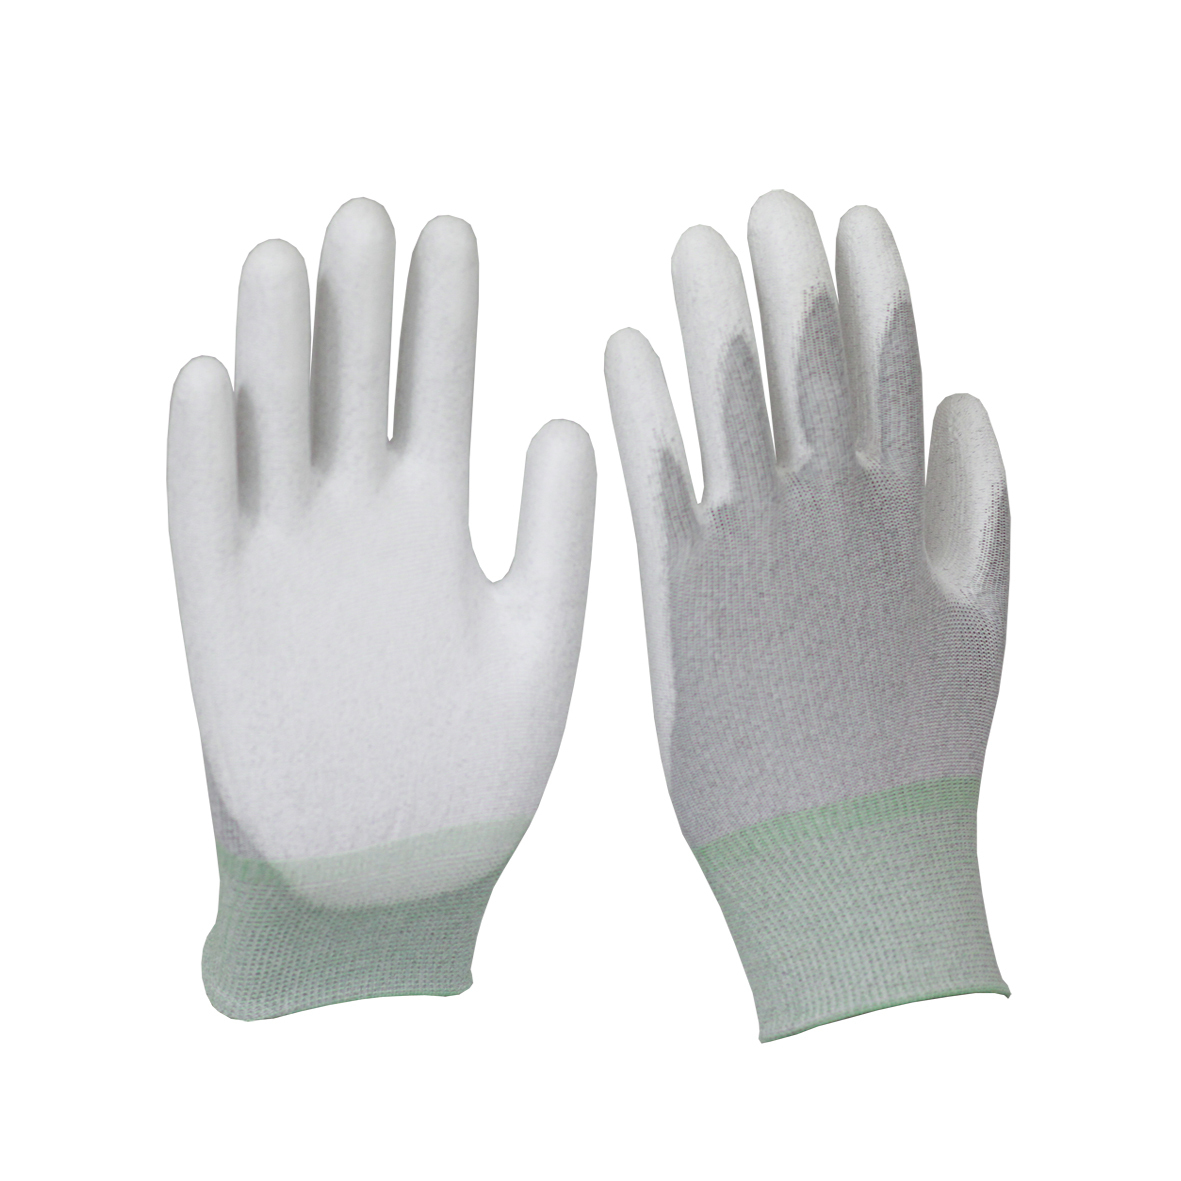 PU Palm Coated Gloves